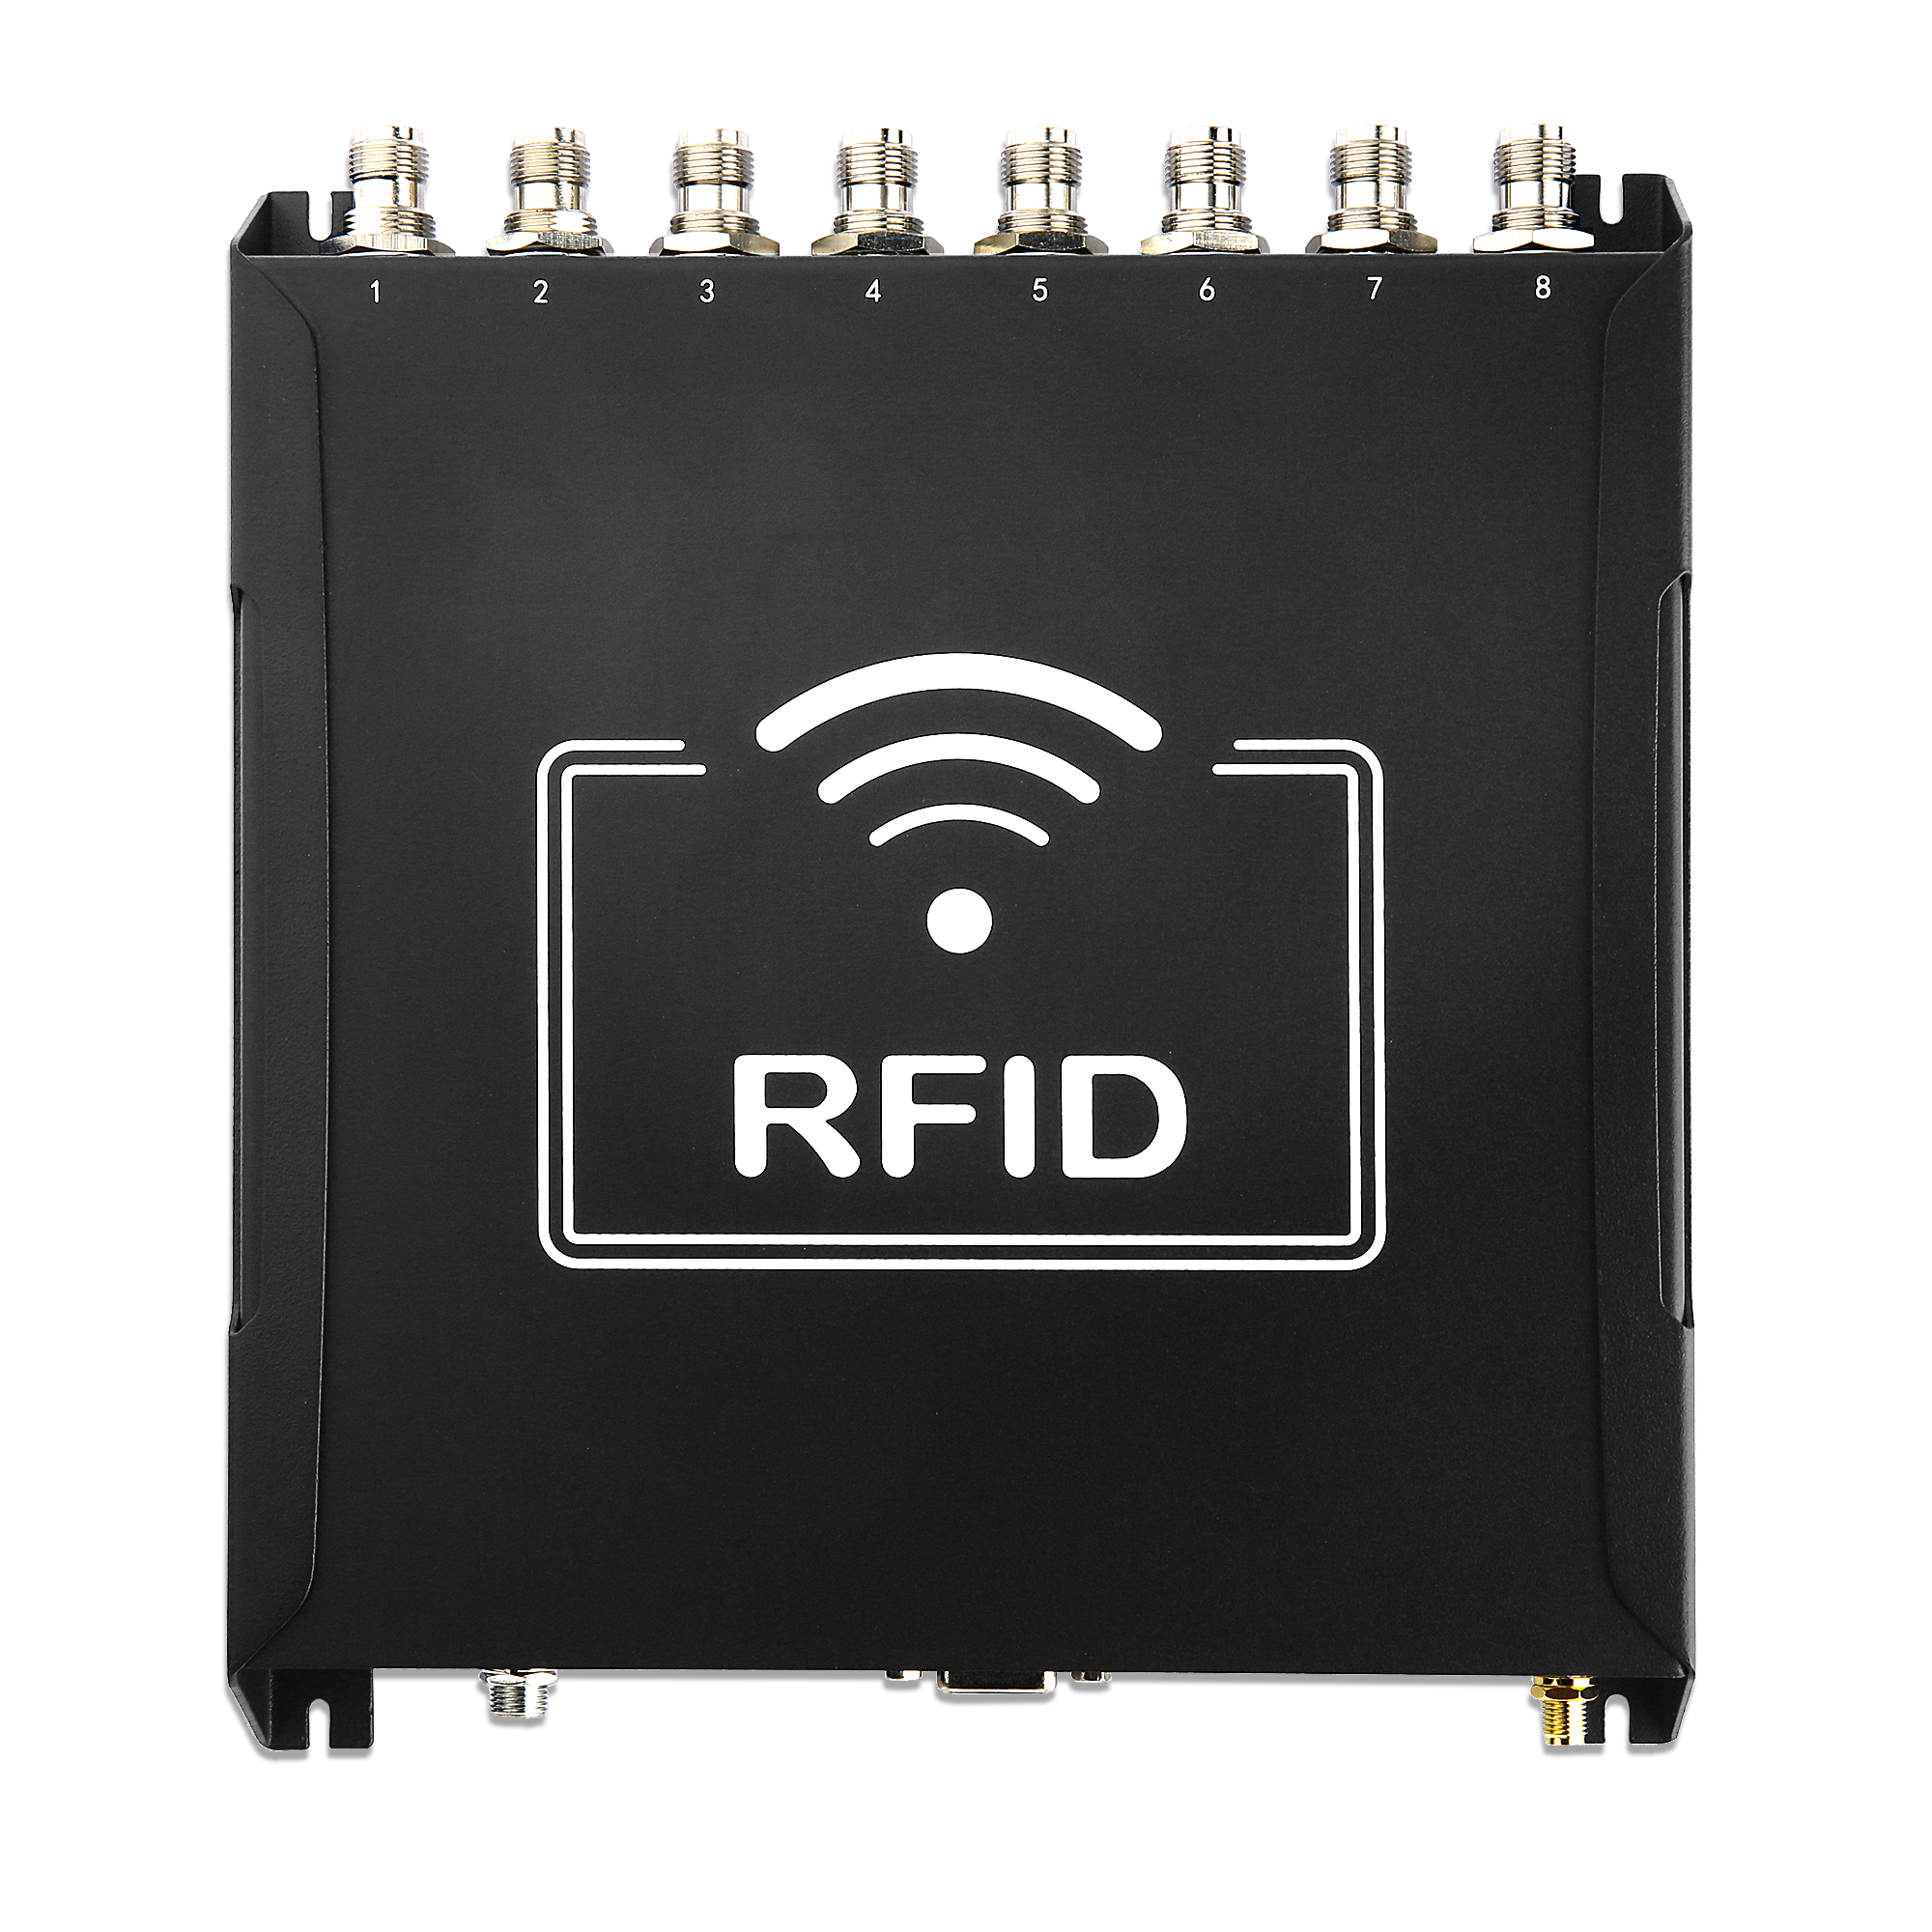 UHF RFID超高频八通道读写器 资产管理柜档案柜18000-6C/6B 国军标GJB7377.1A读写器图片